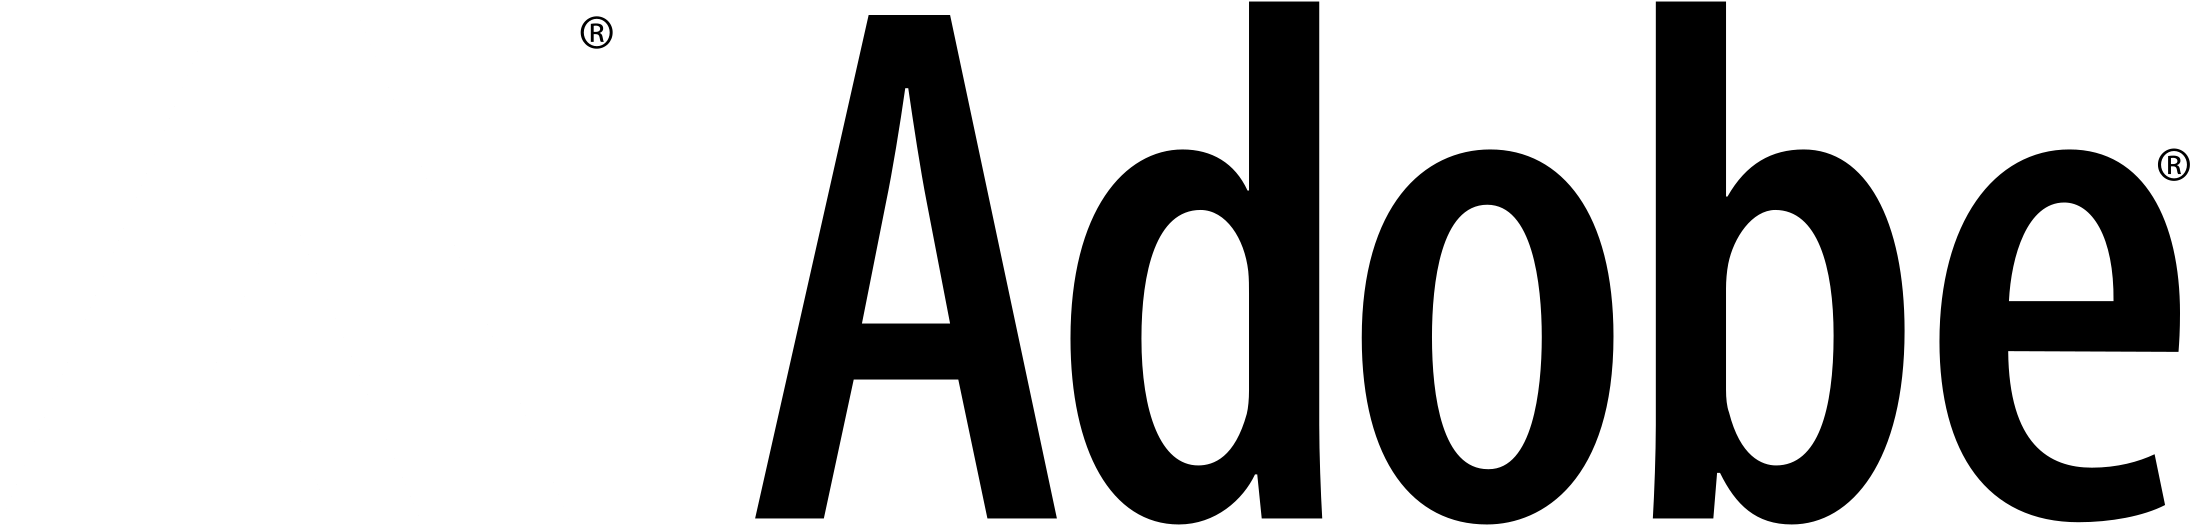 Adobe 01 Logo Black And White - Adobe Logo Transparent White Clipart (2400x2400), Png Download